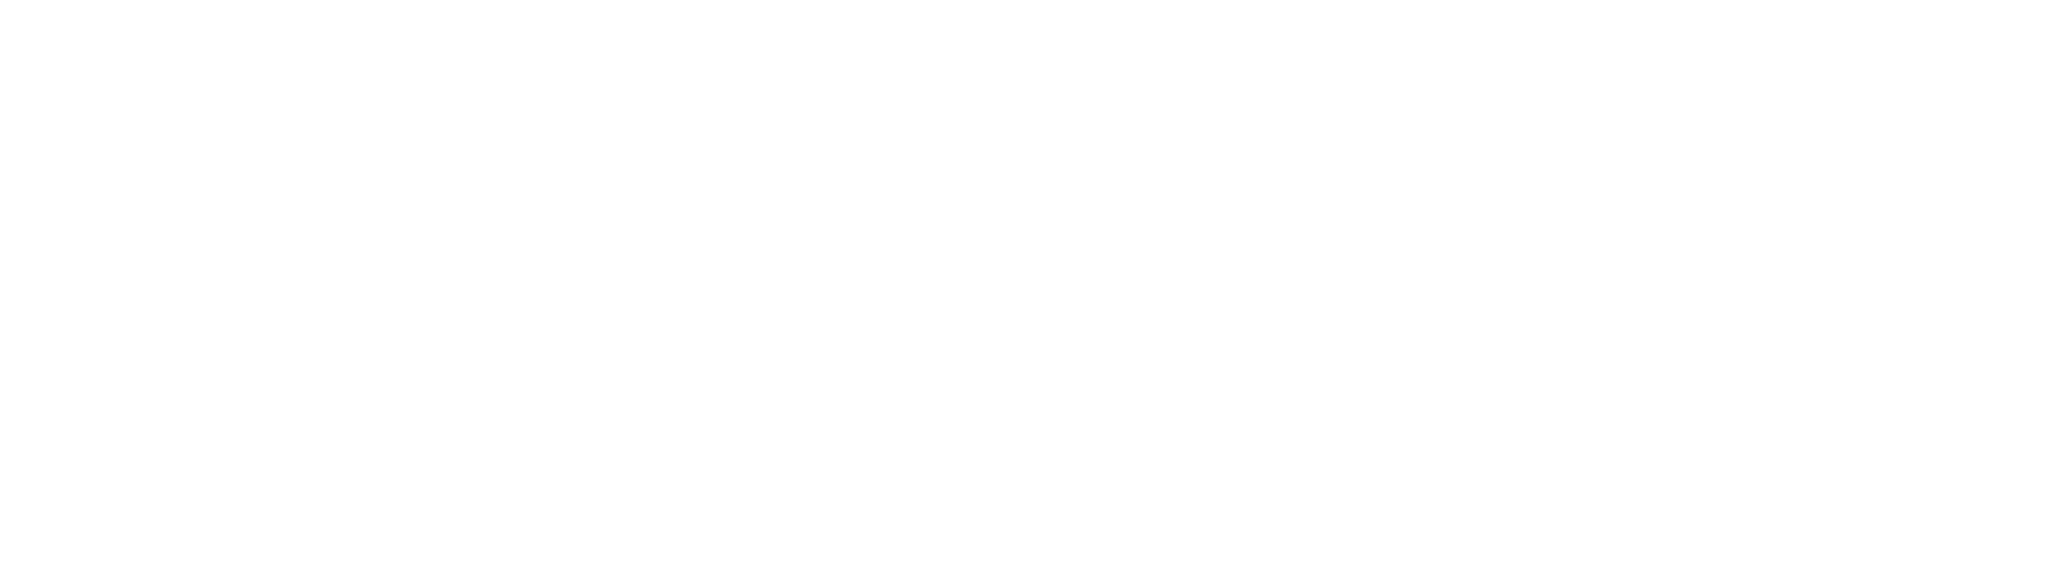 Fellowship Reformed Church (PCA) Logo